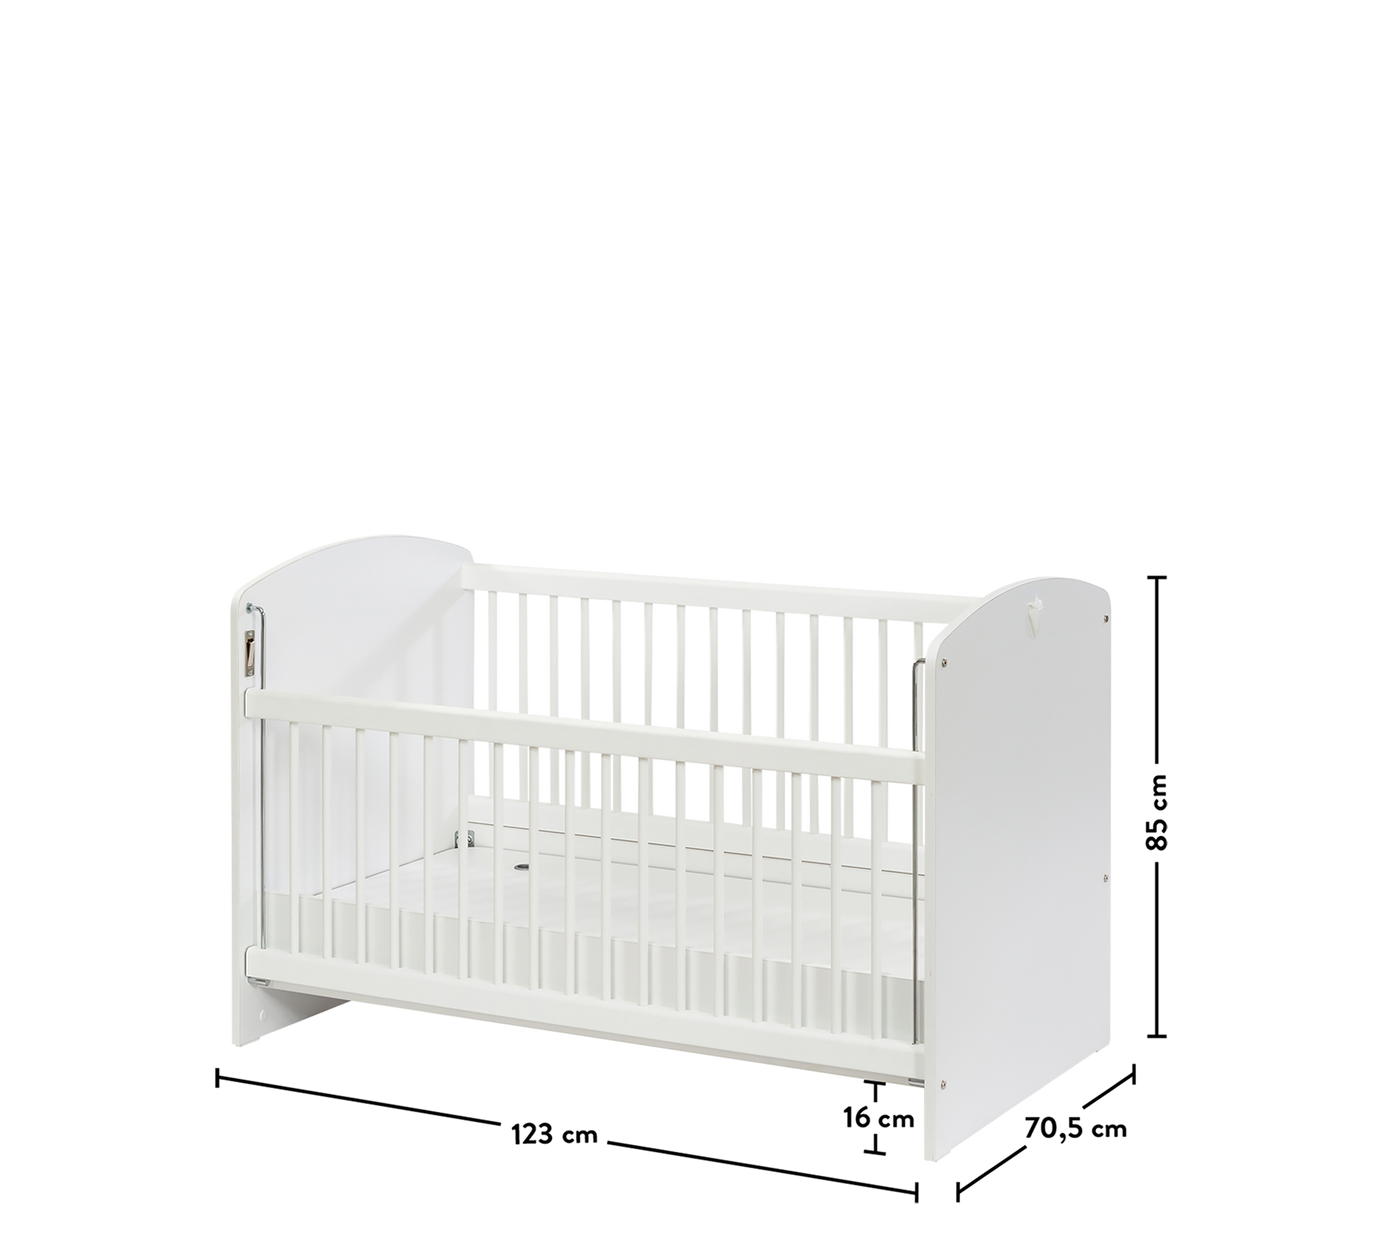 Customary Lift Bed White (60x120 cm)